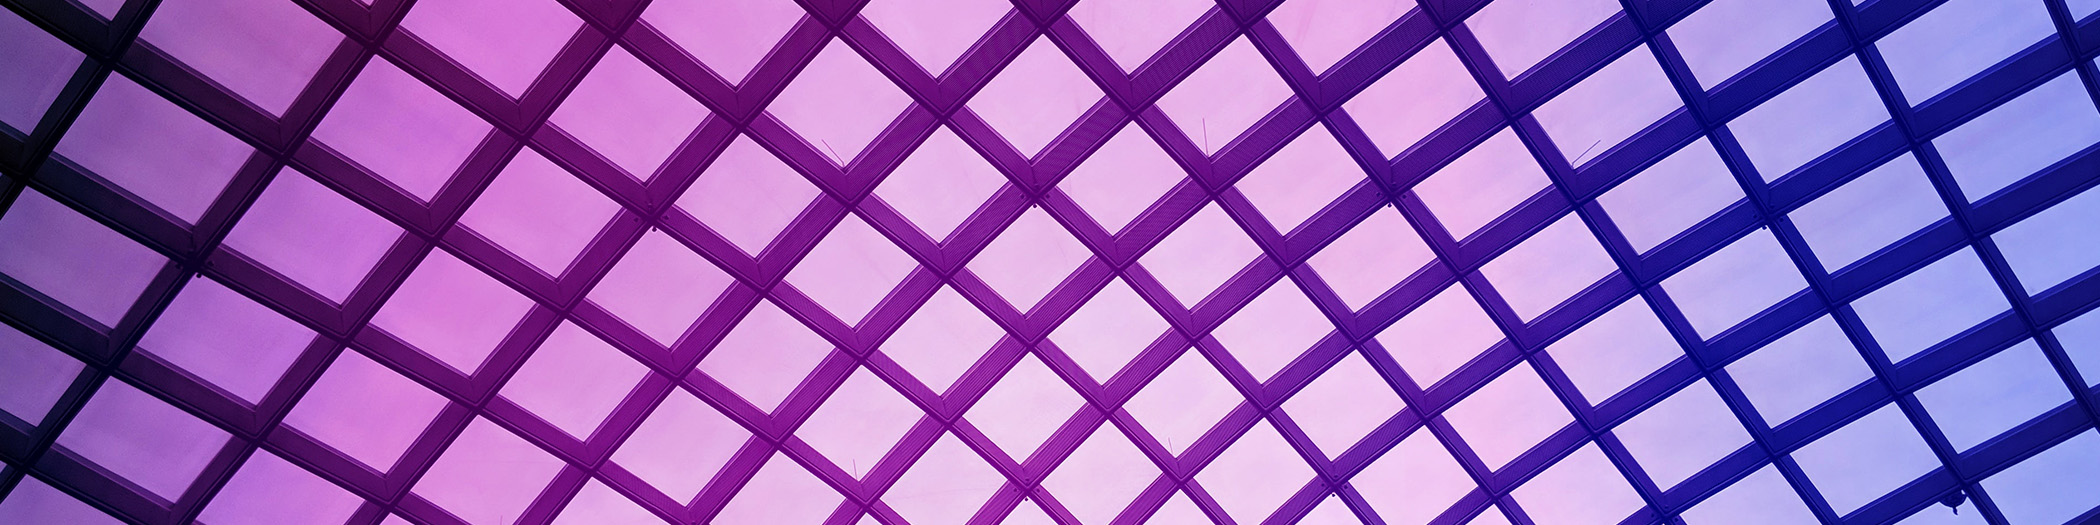 Purple background with darker grid over it.